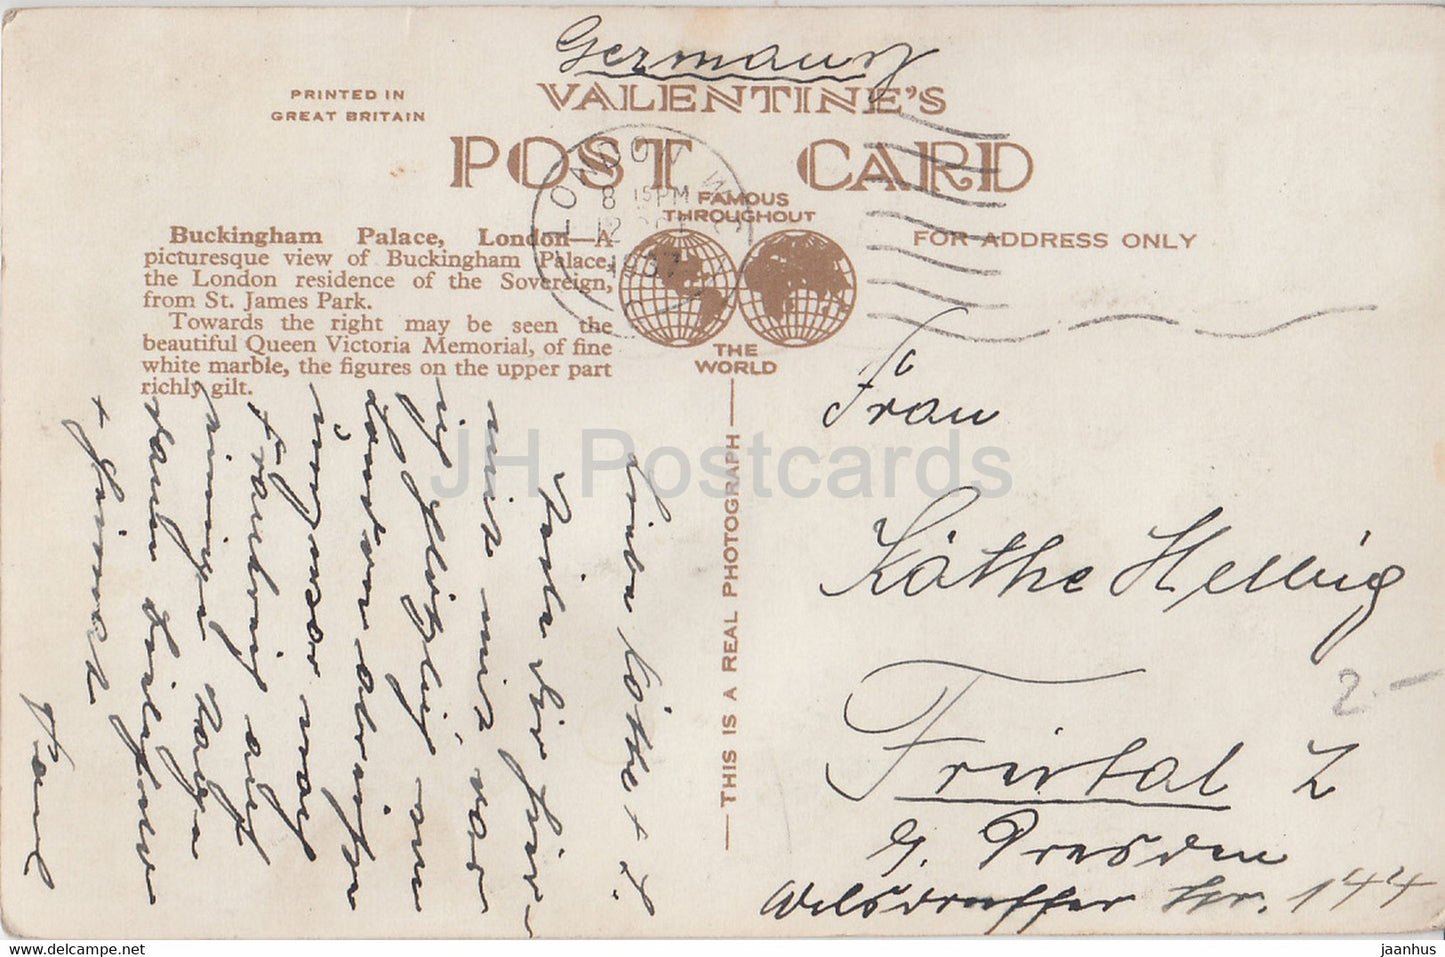 Londres - Buckingham Palace - 219784 - carte postale ancienne - 1937 - Angleterre - Royaume-Uni - utilisé